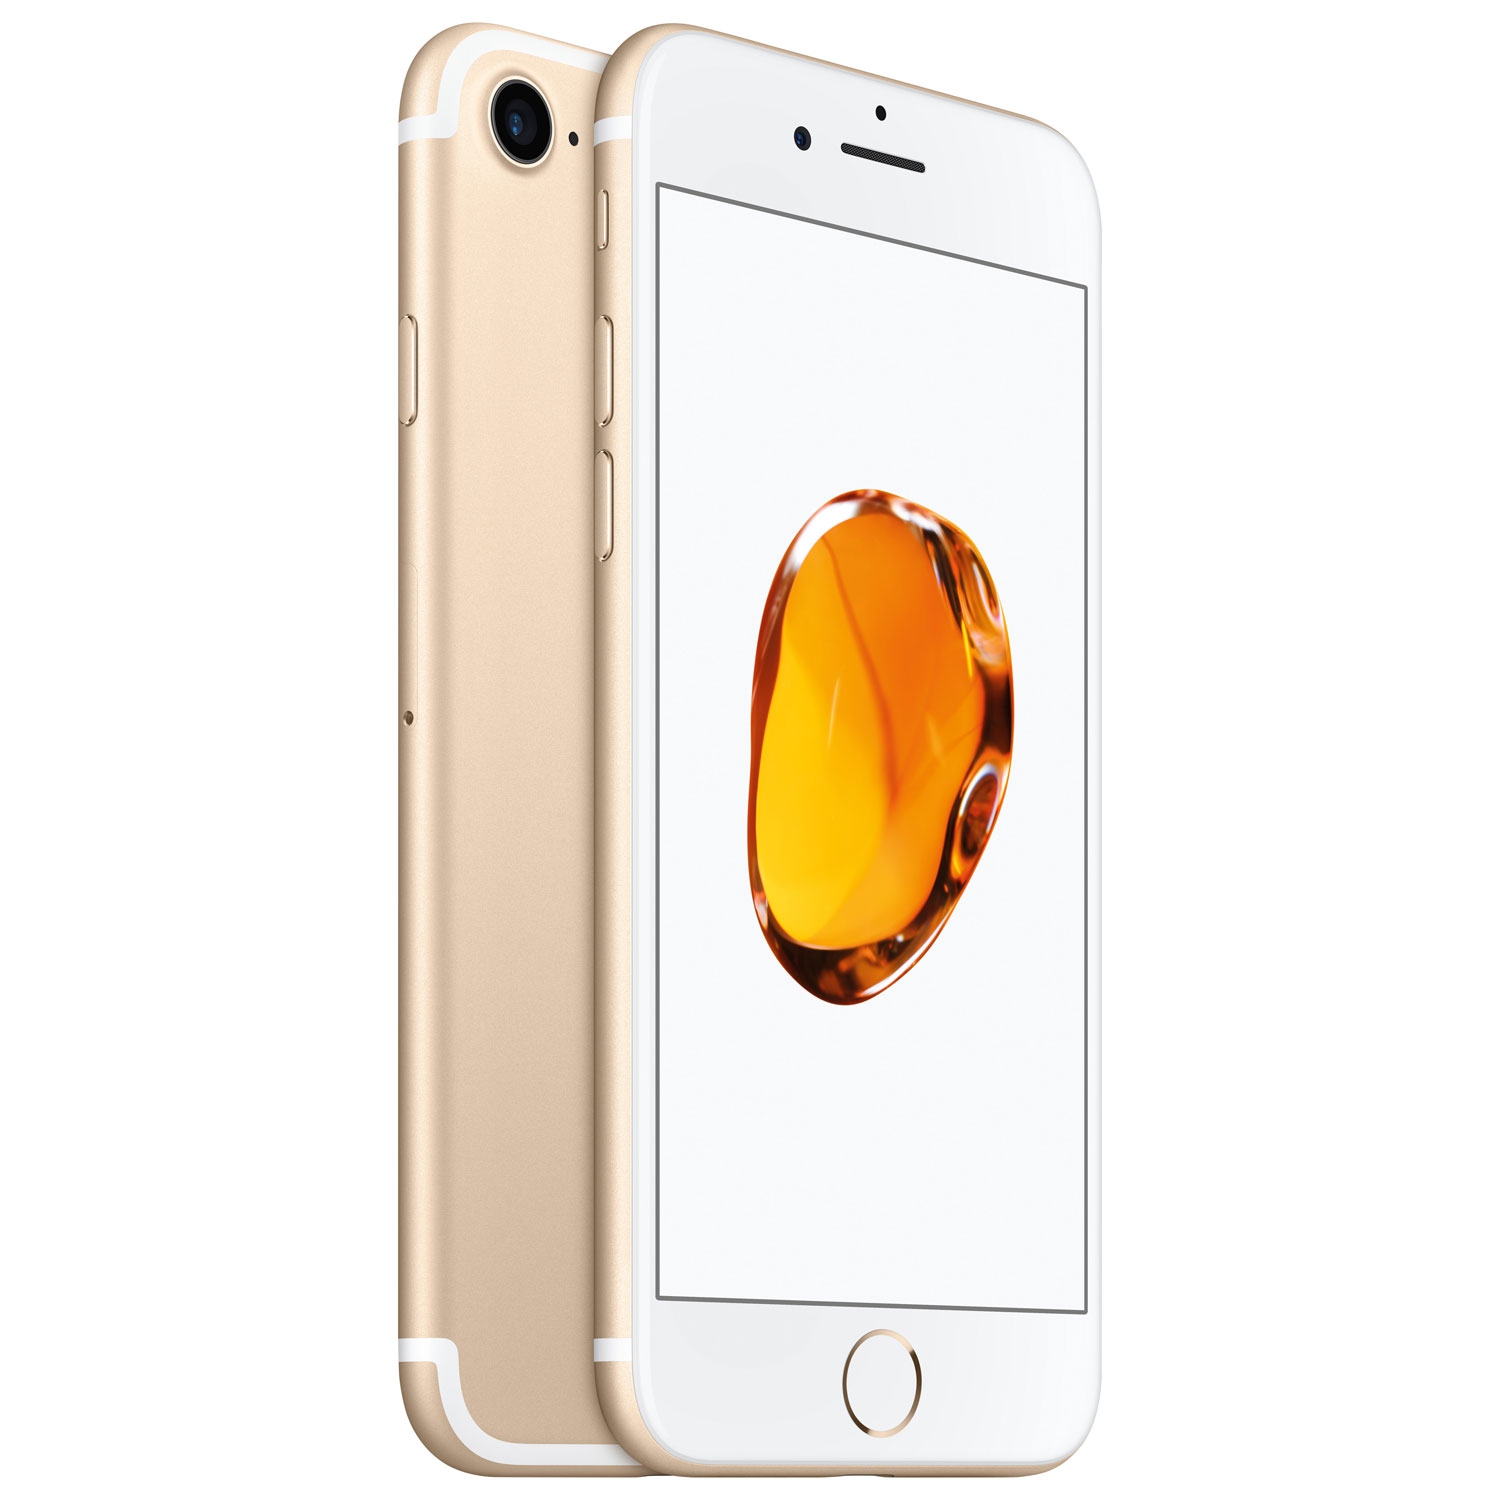 Refurbished (Excellent) - Apple iPhone 7 128GB Smartphone - Gold - Unlocked - Certified Refurbished